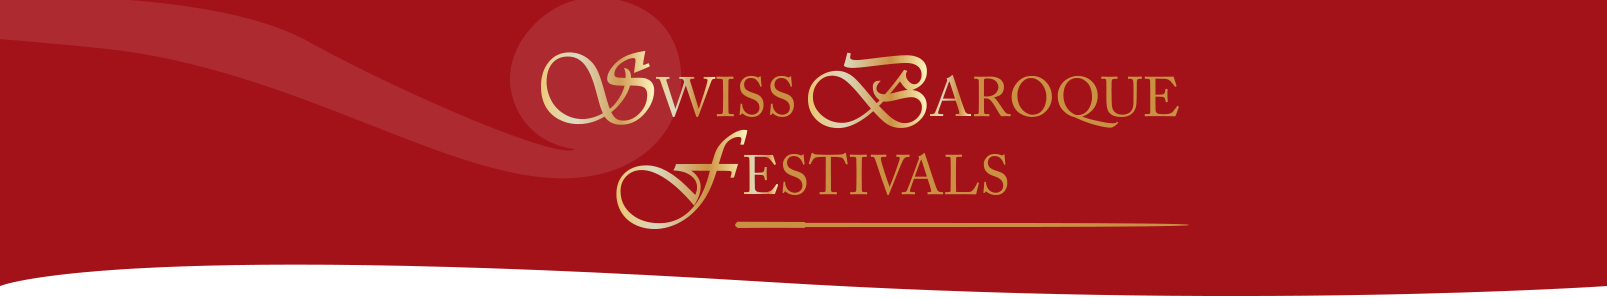 Swiss Baroque Festivals